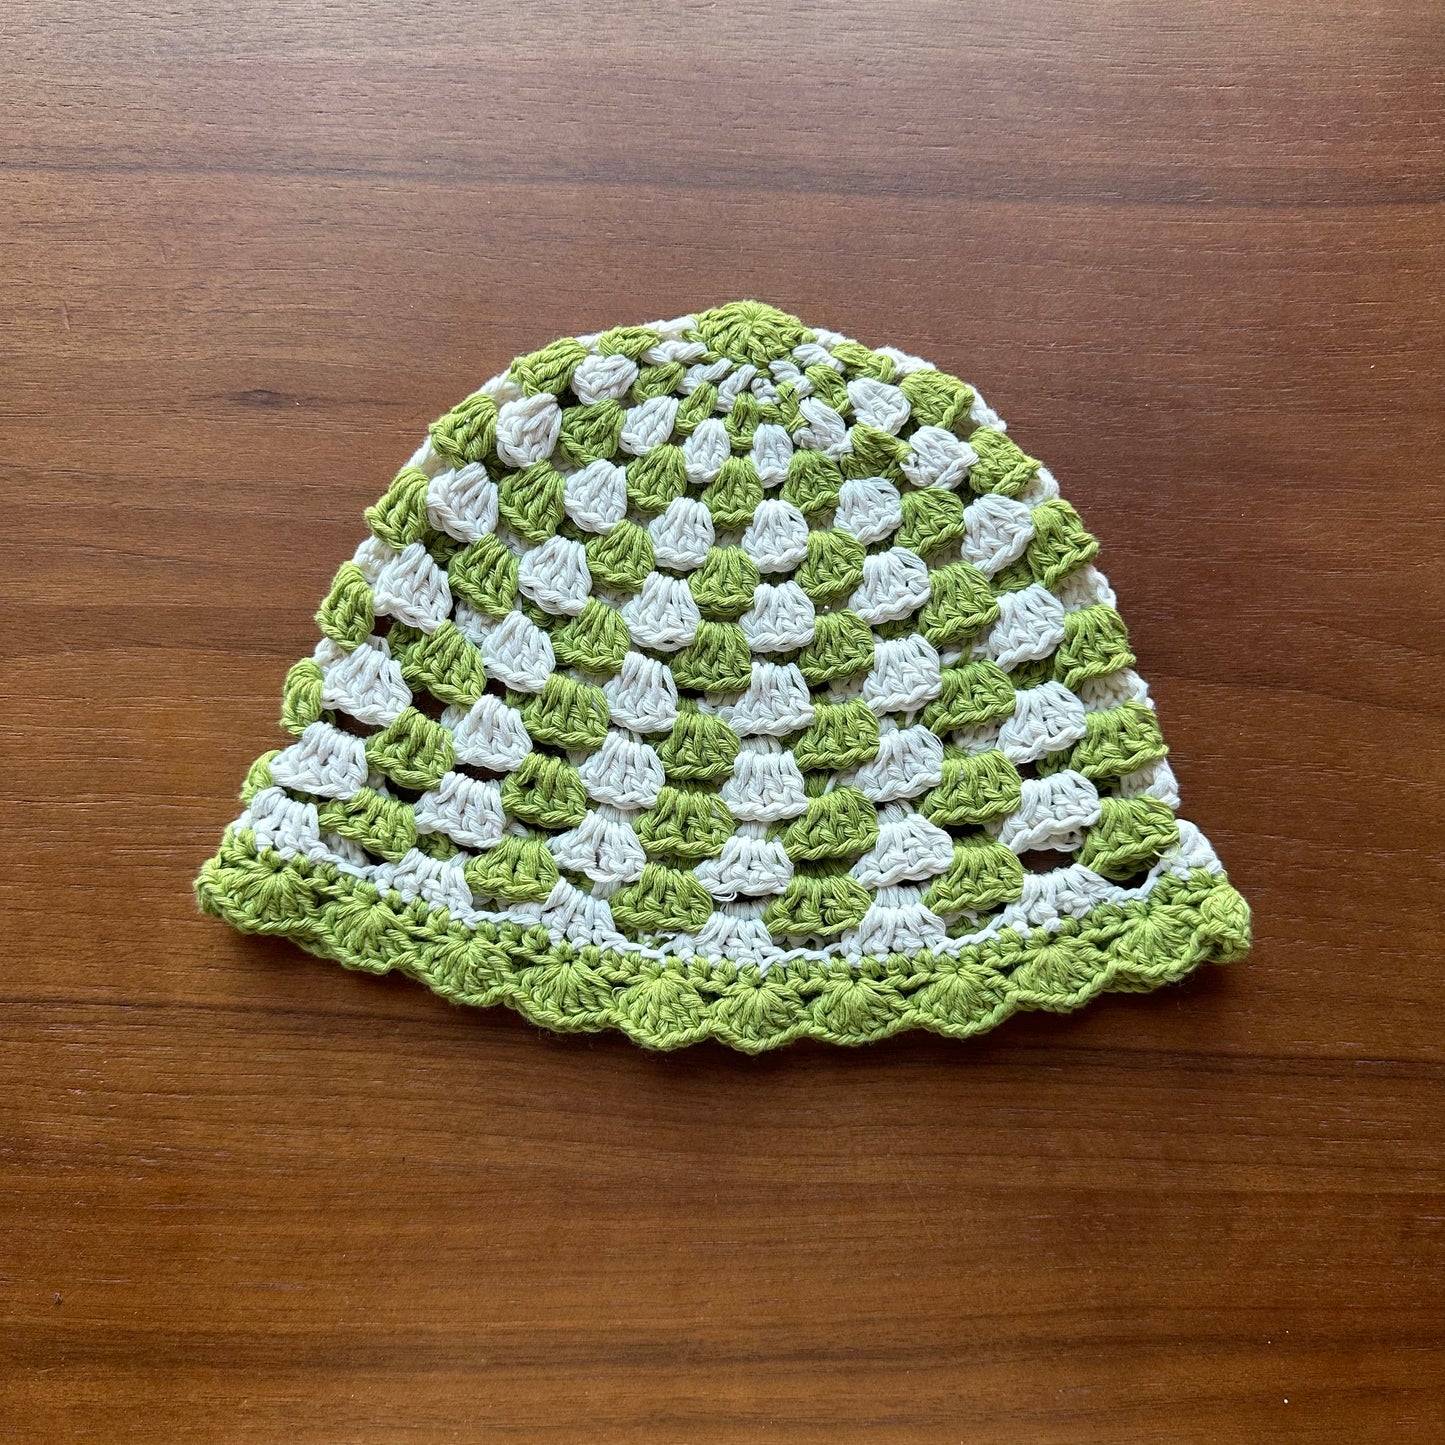 Handmade cotton crochet summer hats - CHOOSE YOUR COLOUR